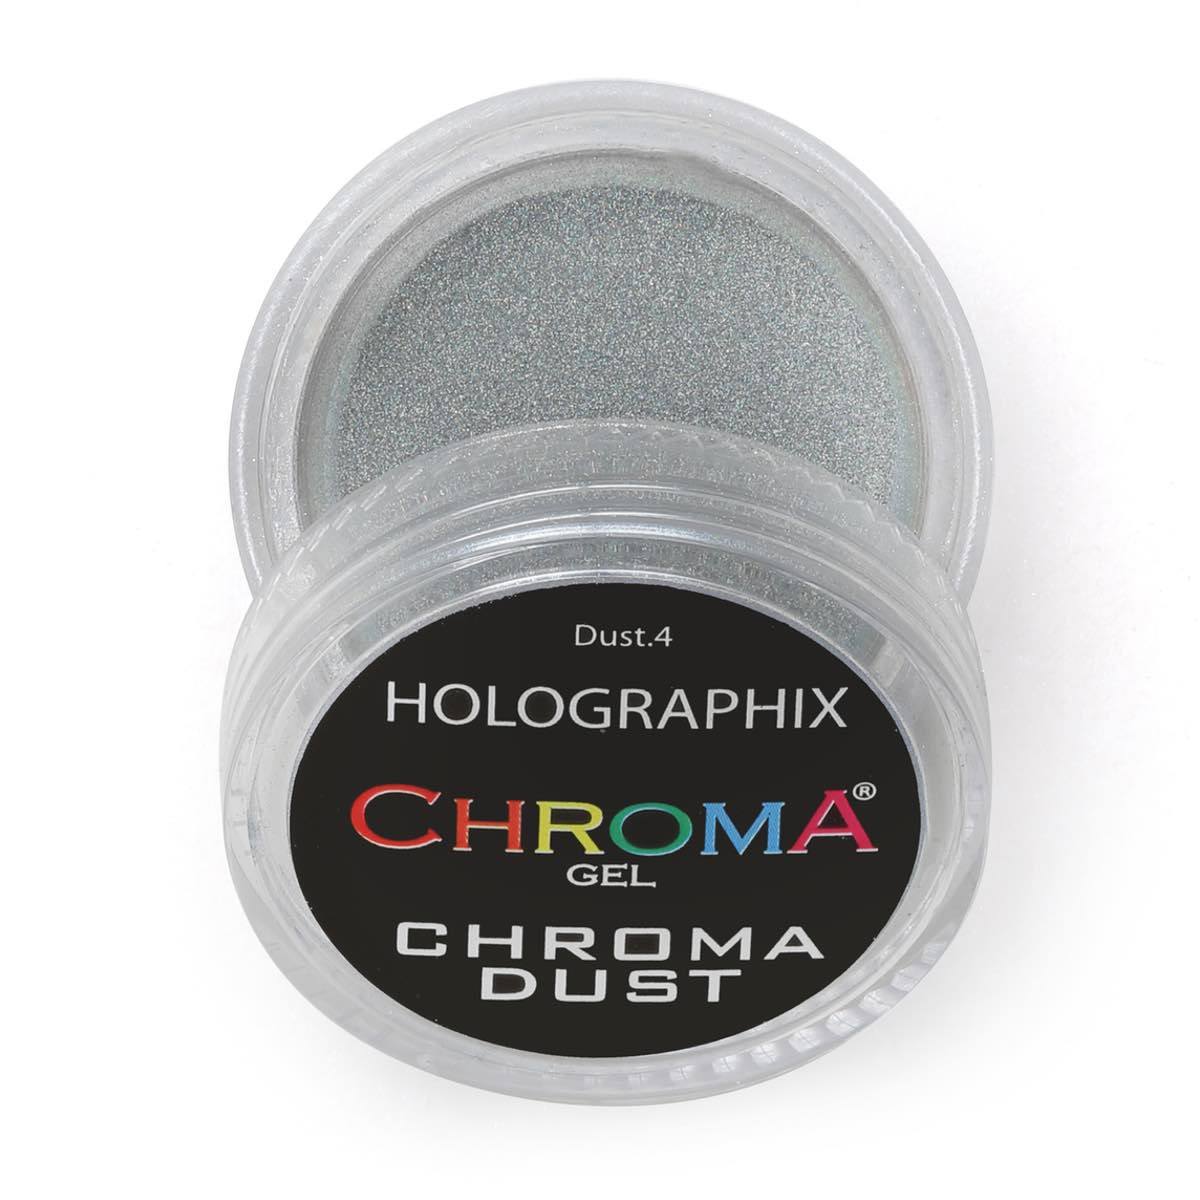 Chroma Dust No.4 Holographix Chrome Powder - Mirror Nails 1g - Beauty Hair Products Ltd